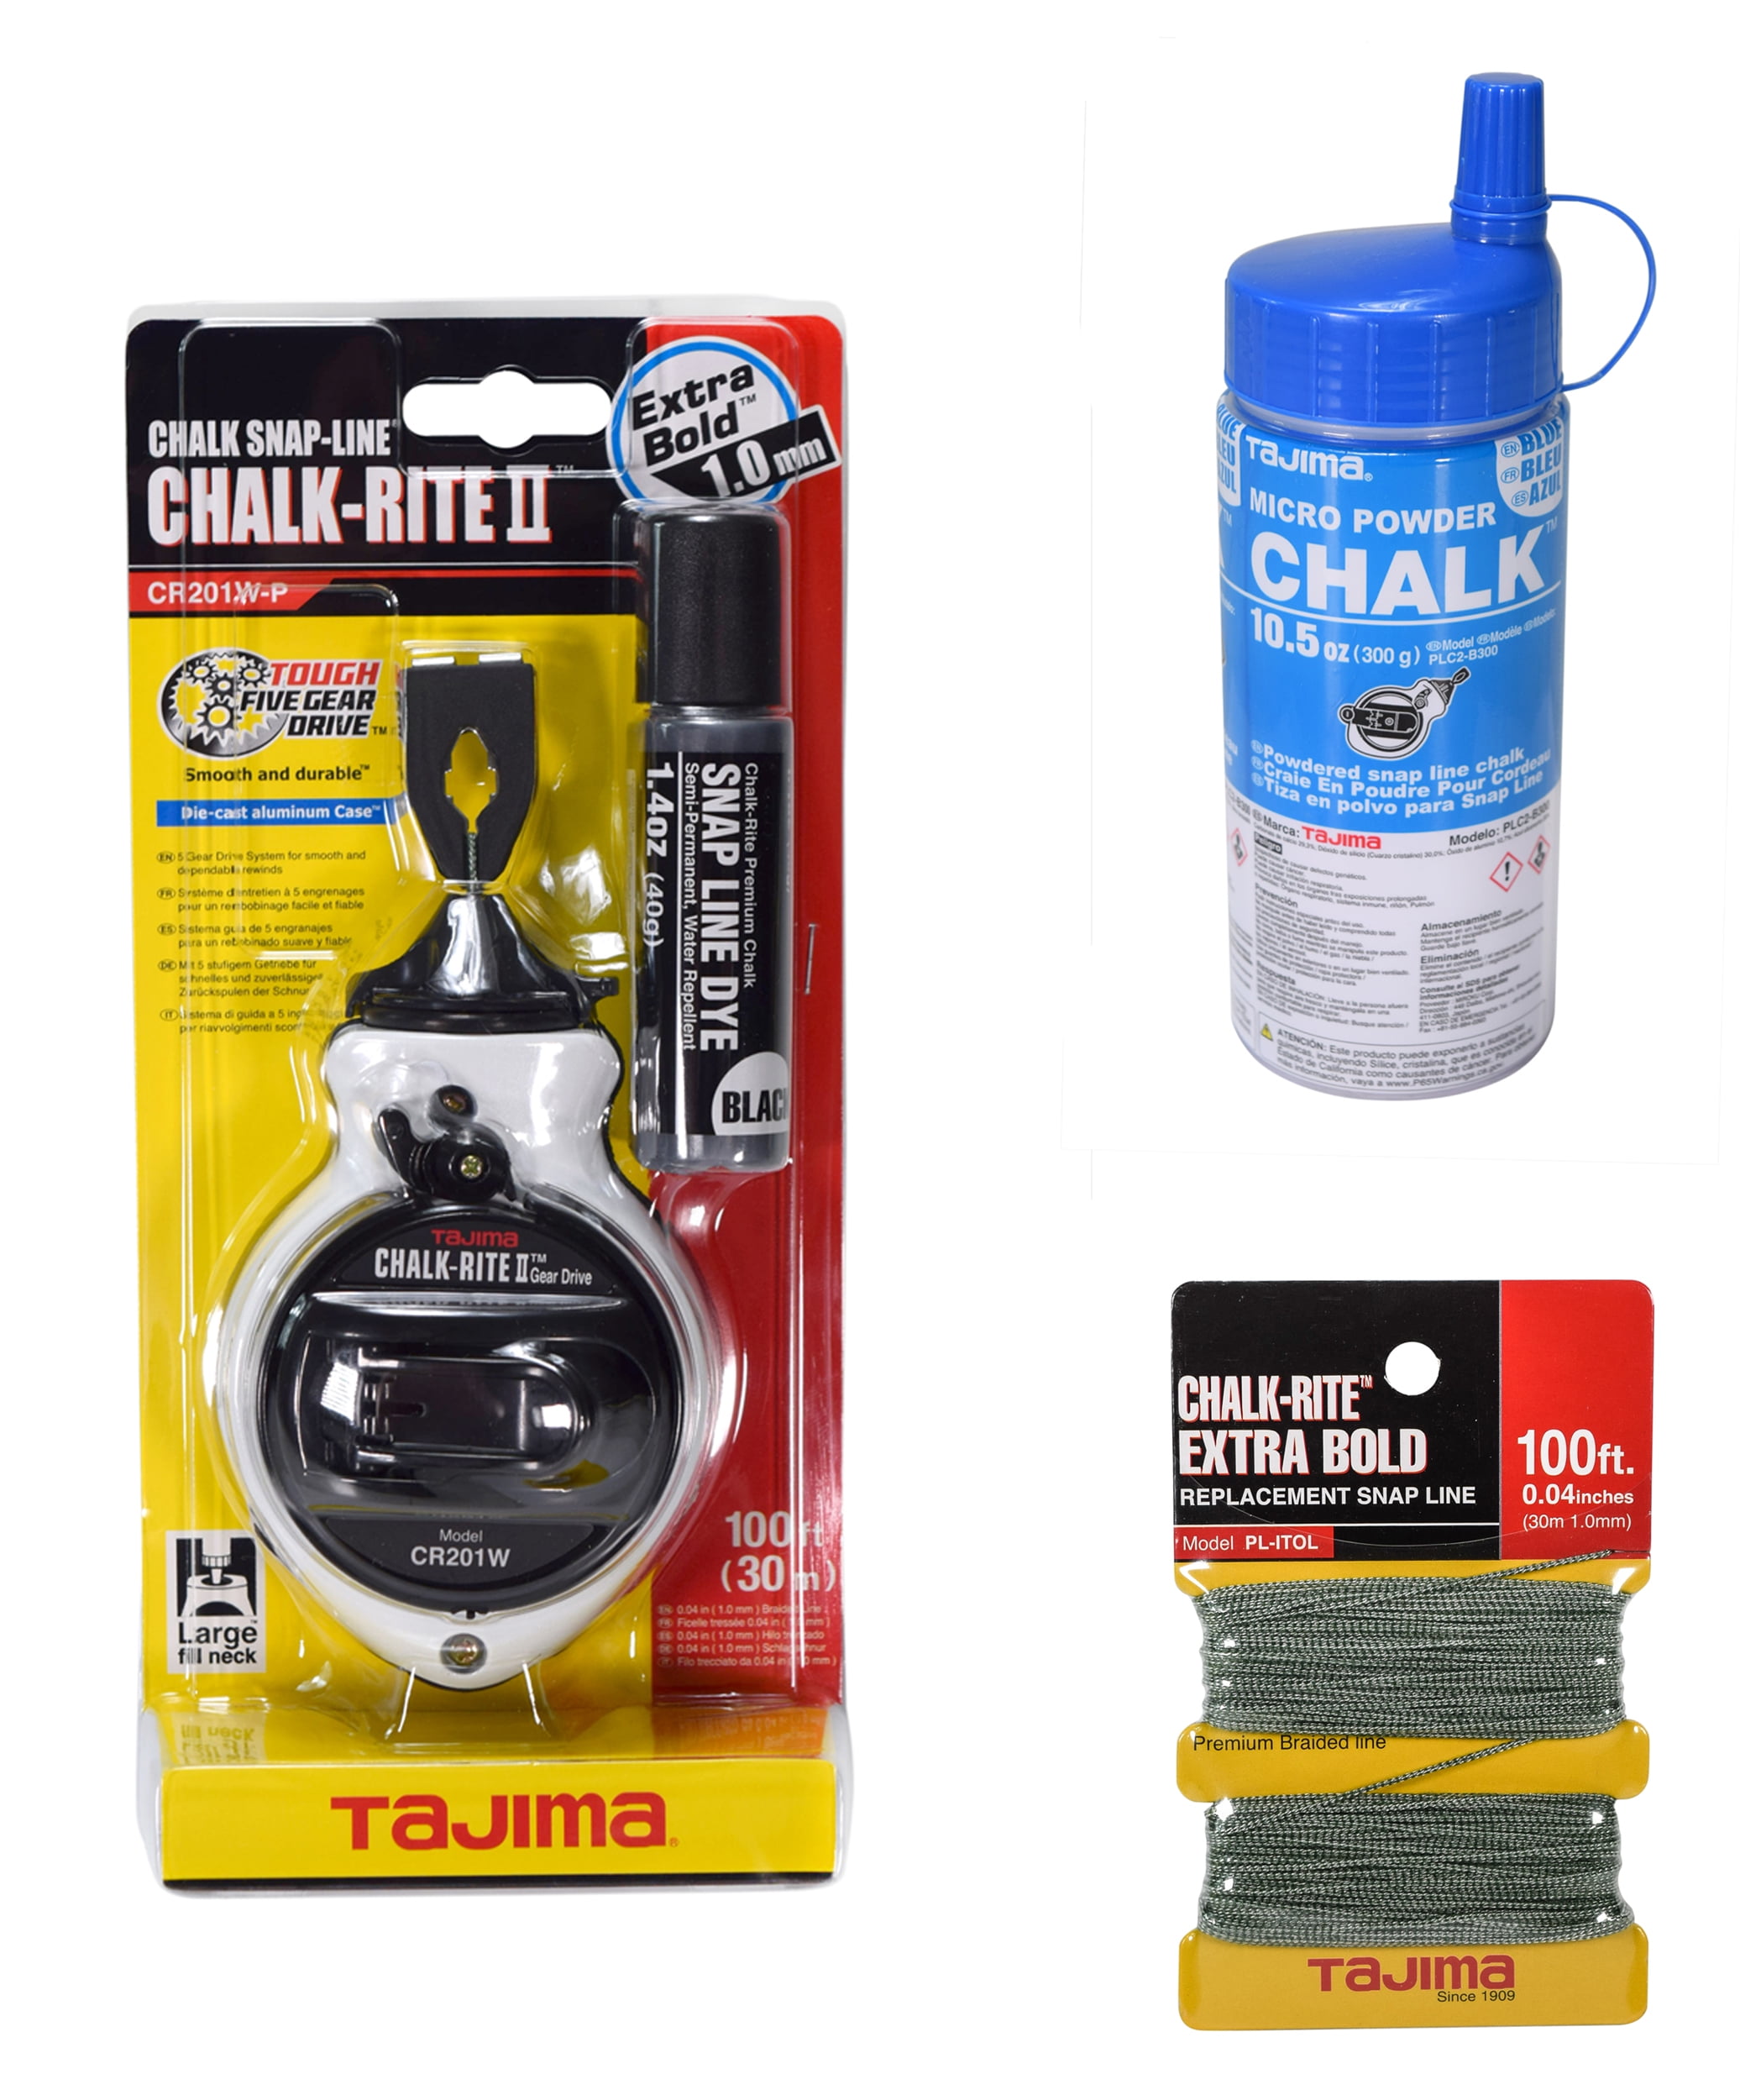 Details about   TAJIMA Chalk Box 5 Pack Chalk-Rite Snap-Line with Extra Bold 1mm Chalk Line 